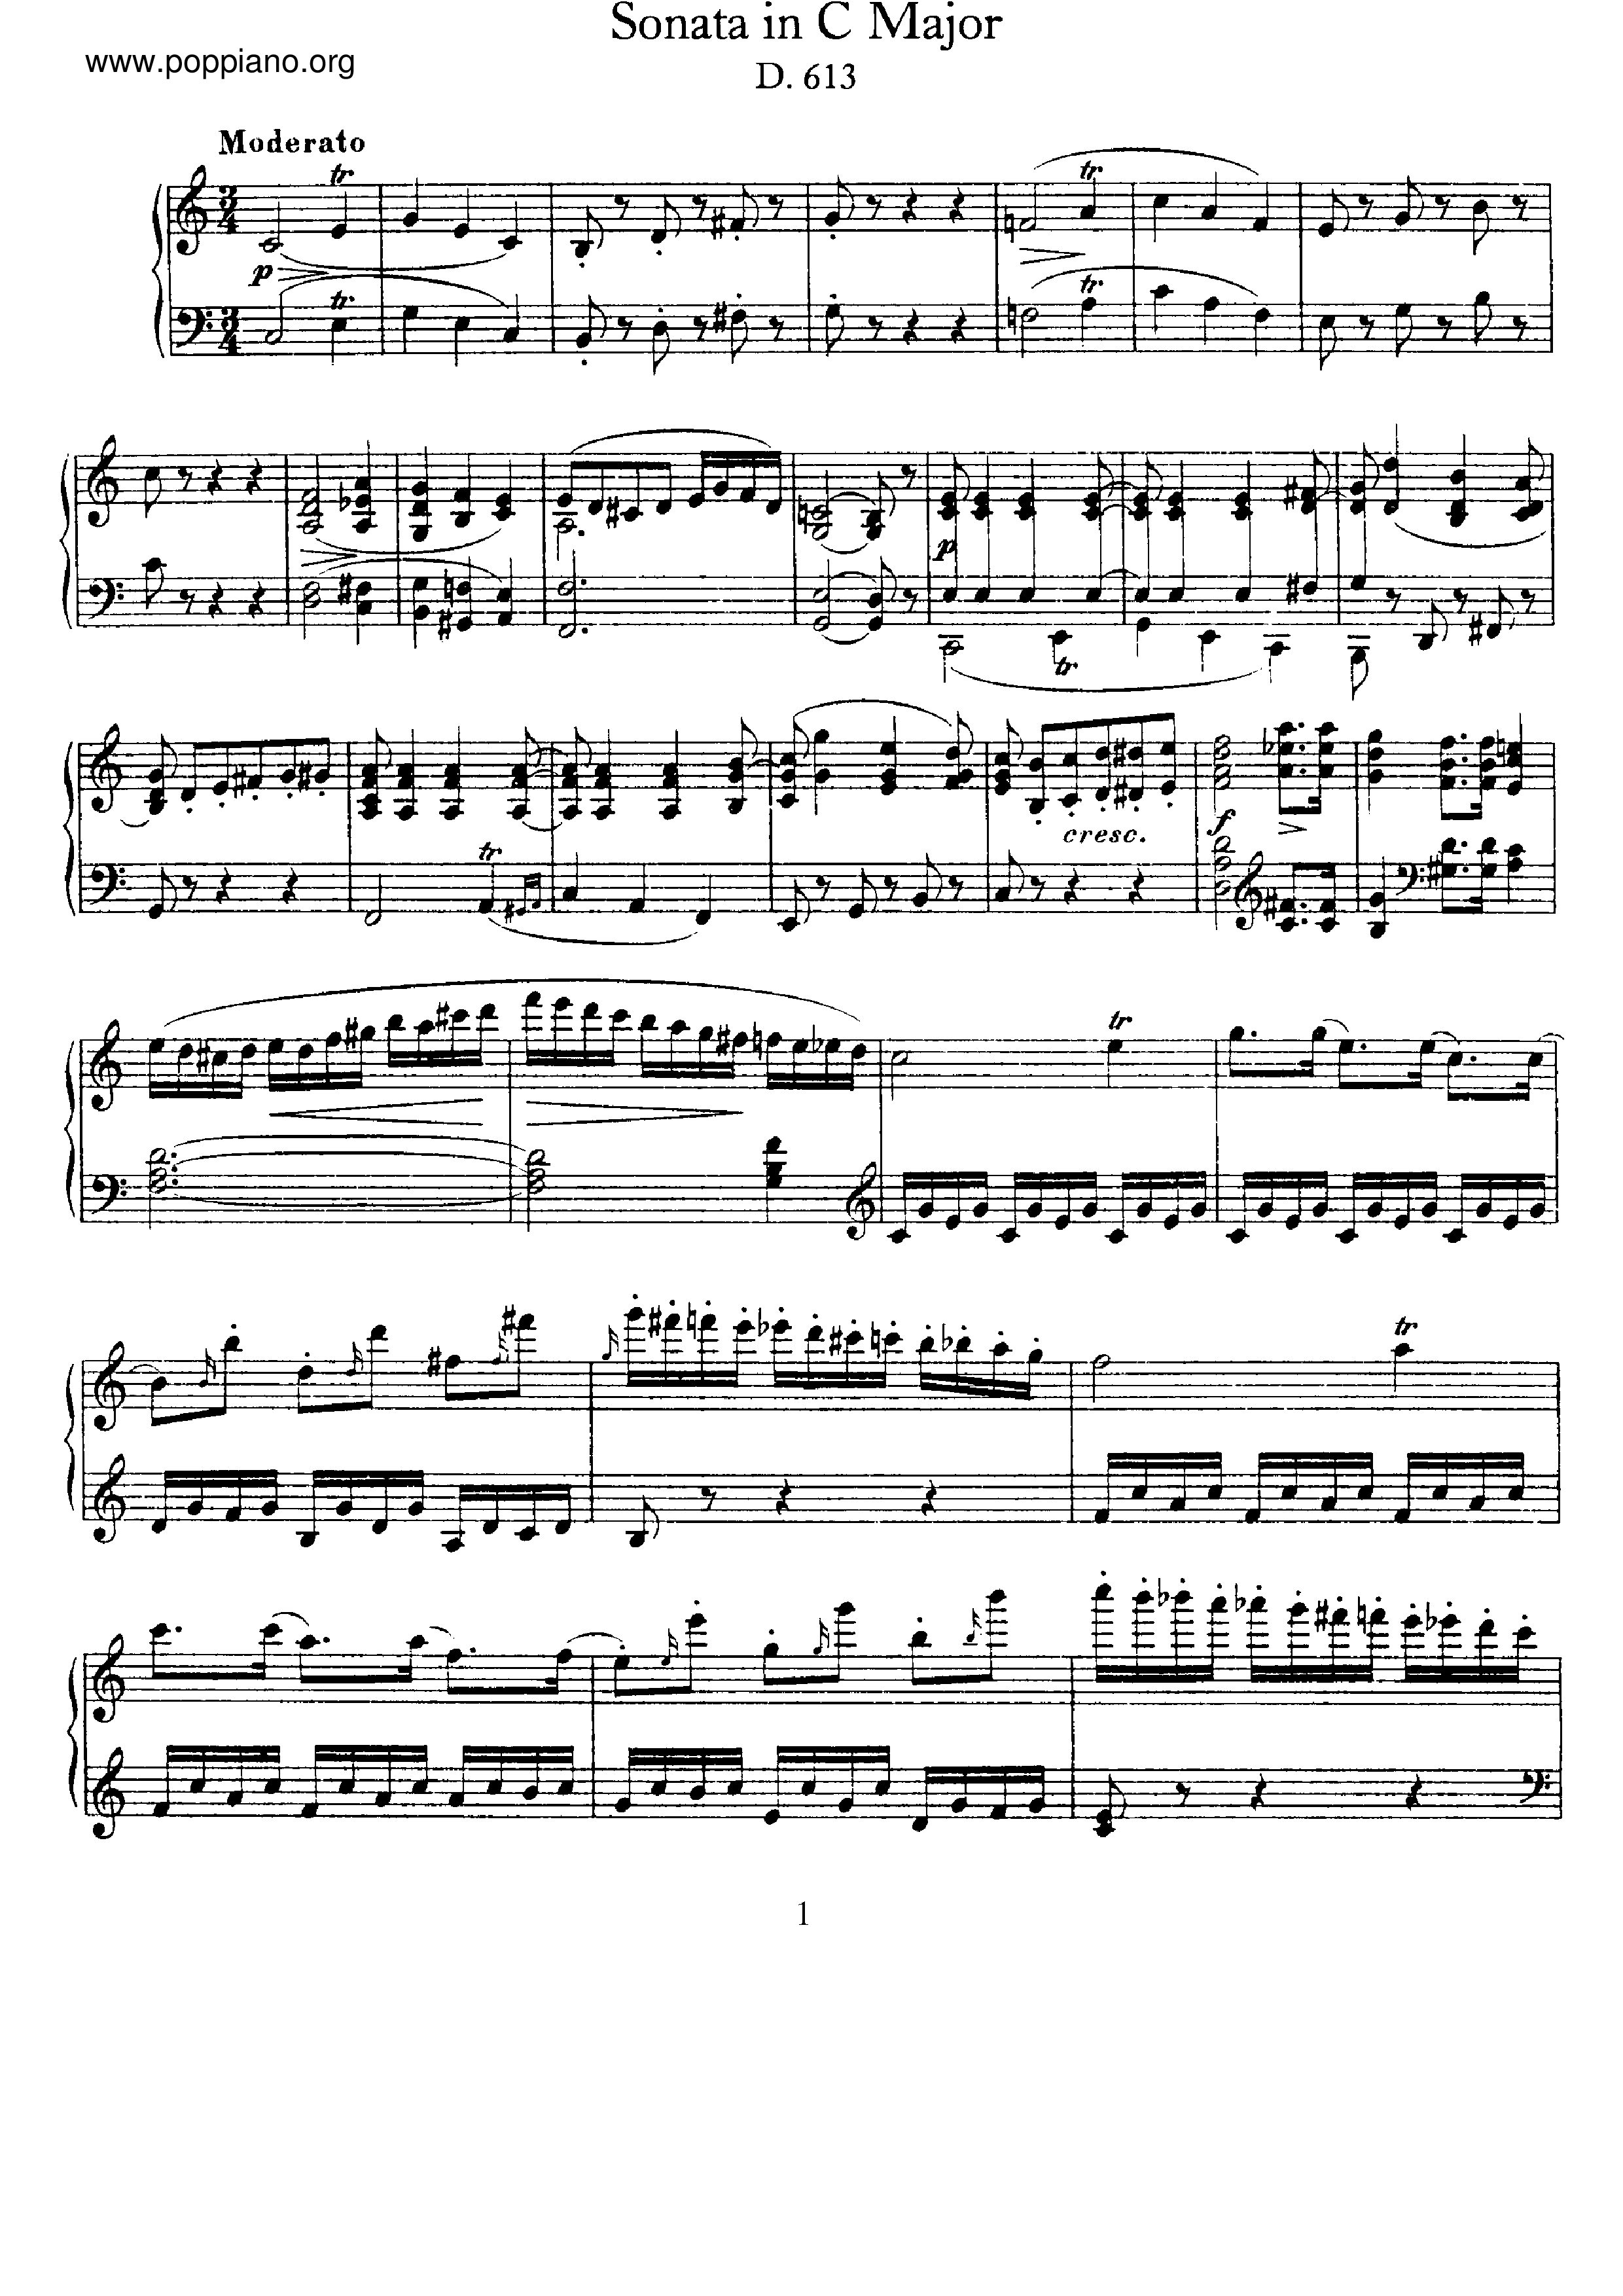 2 Movements from a Piano Sonata in C Major, D.613 Score